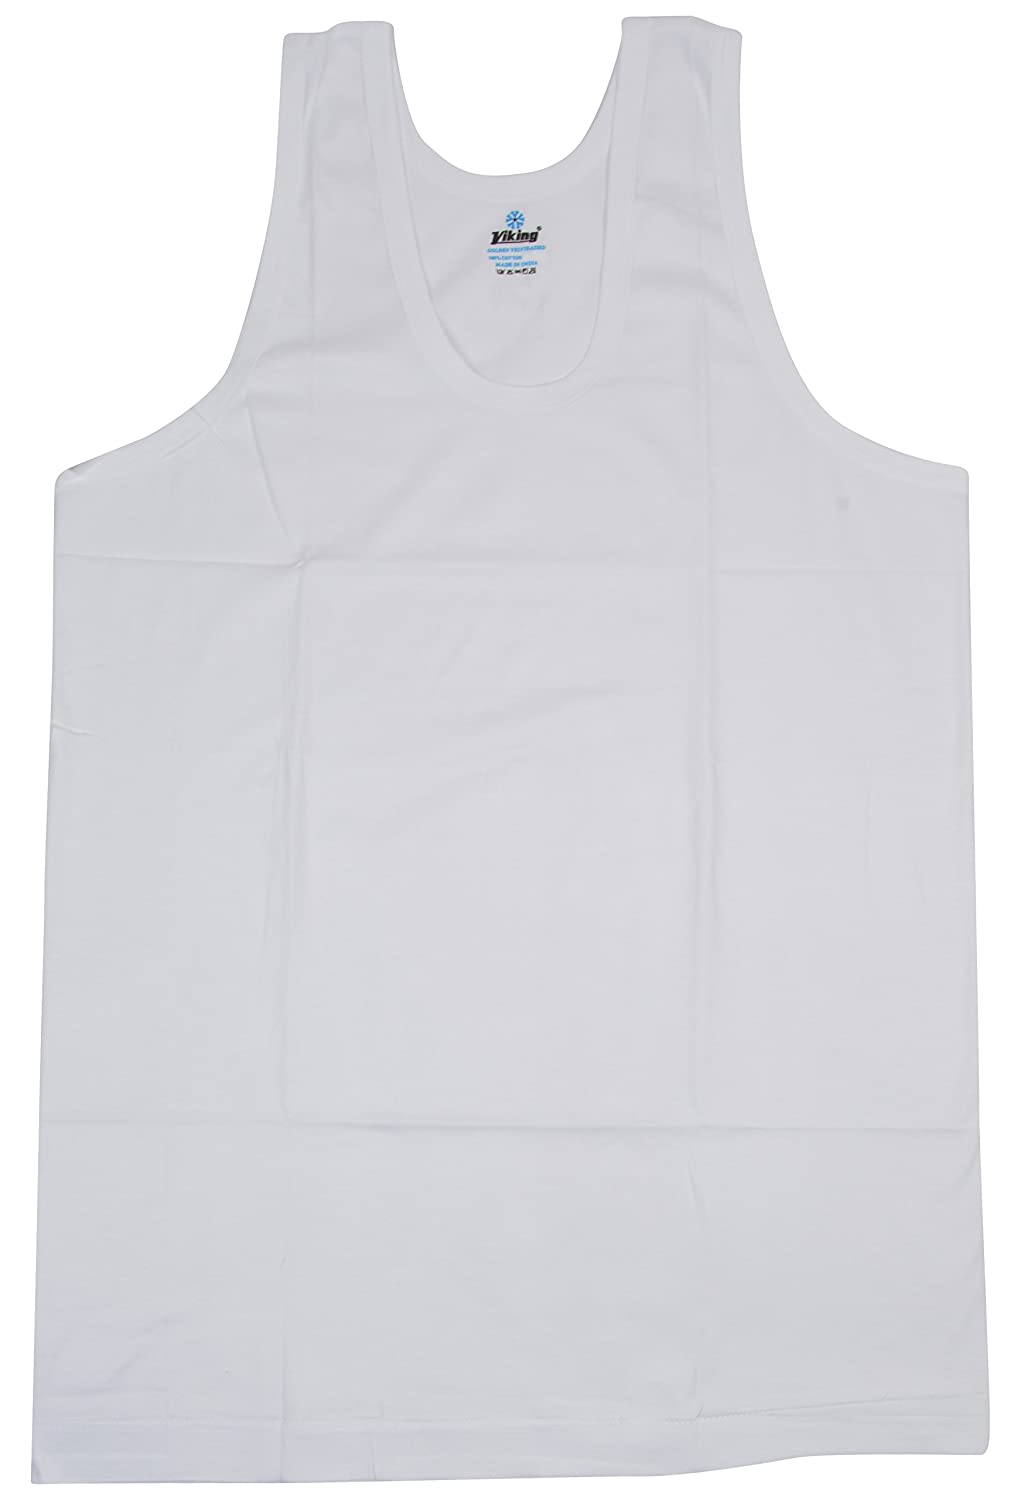 Viking Sleeveless Men's Round Neck White Vests (Pack of 5) - Stilento